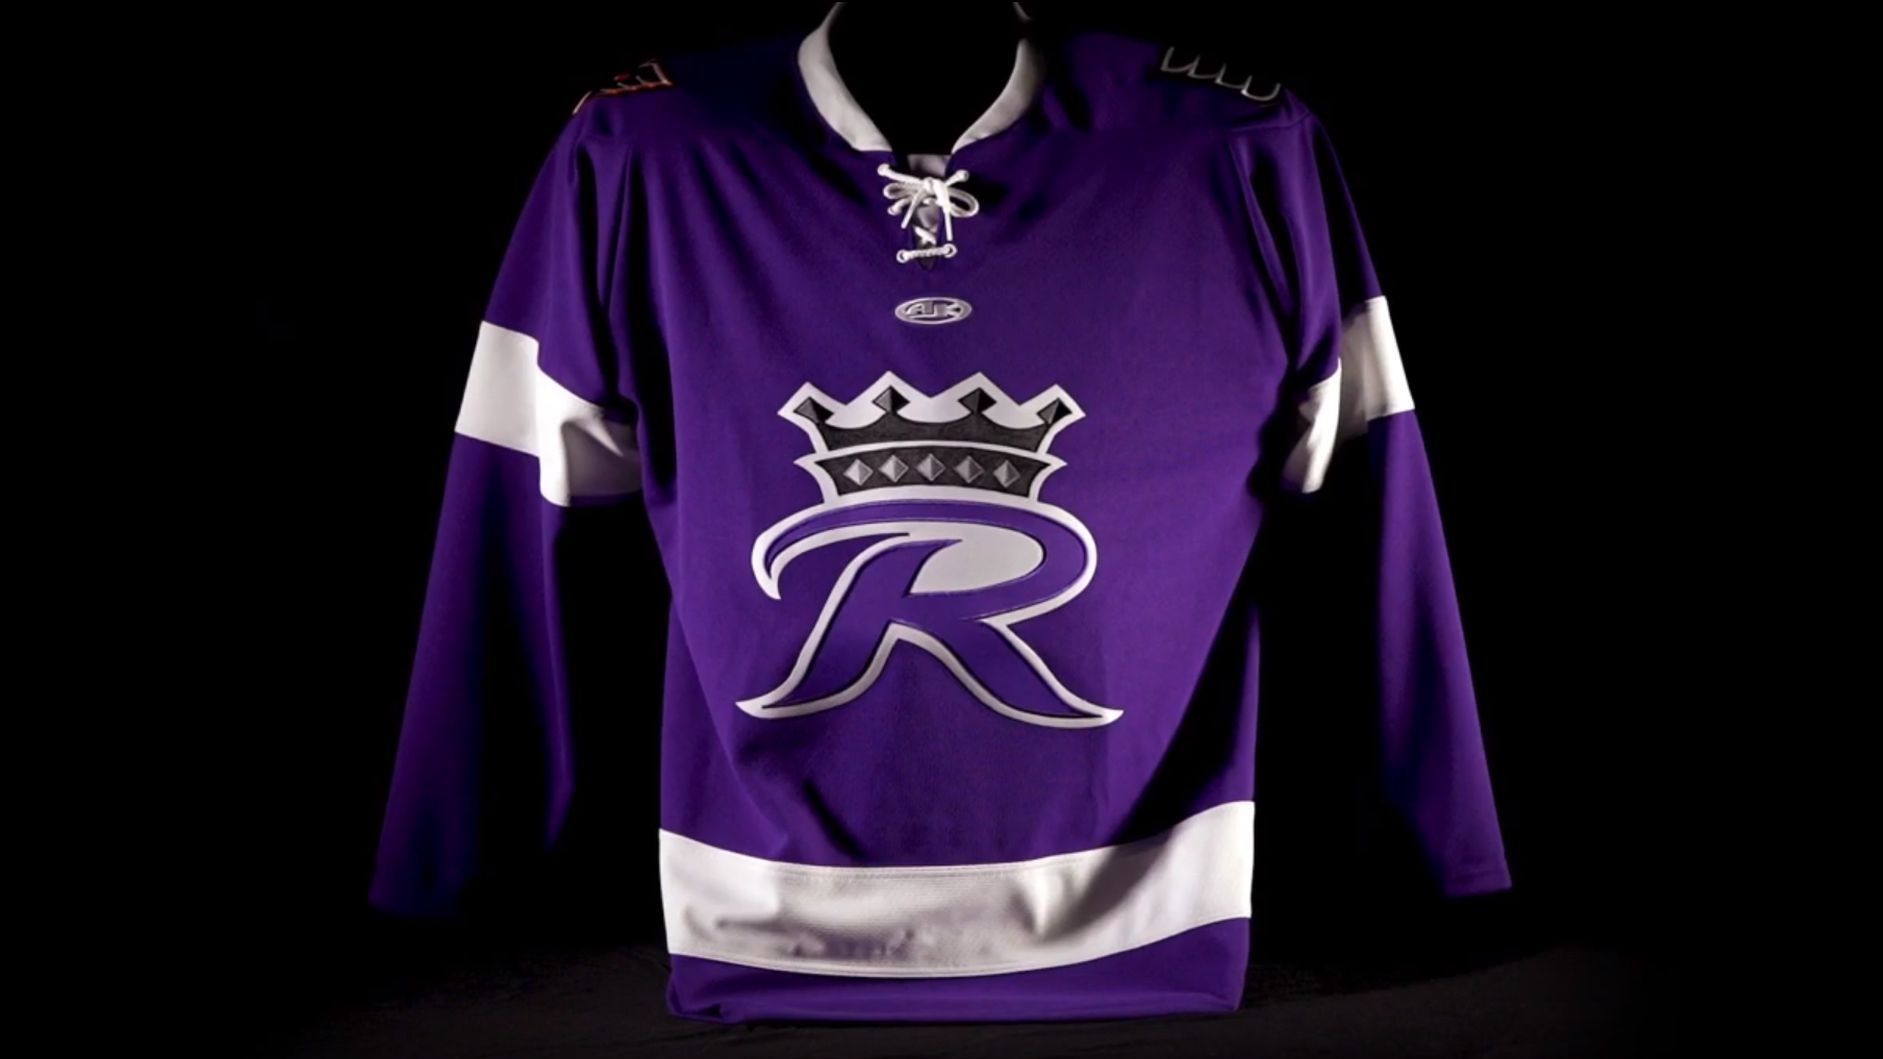 royals hockey jersey